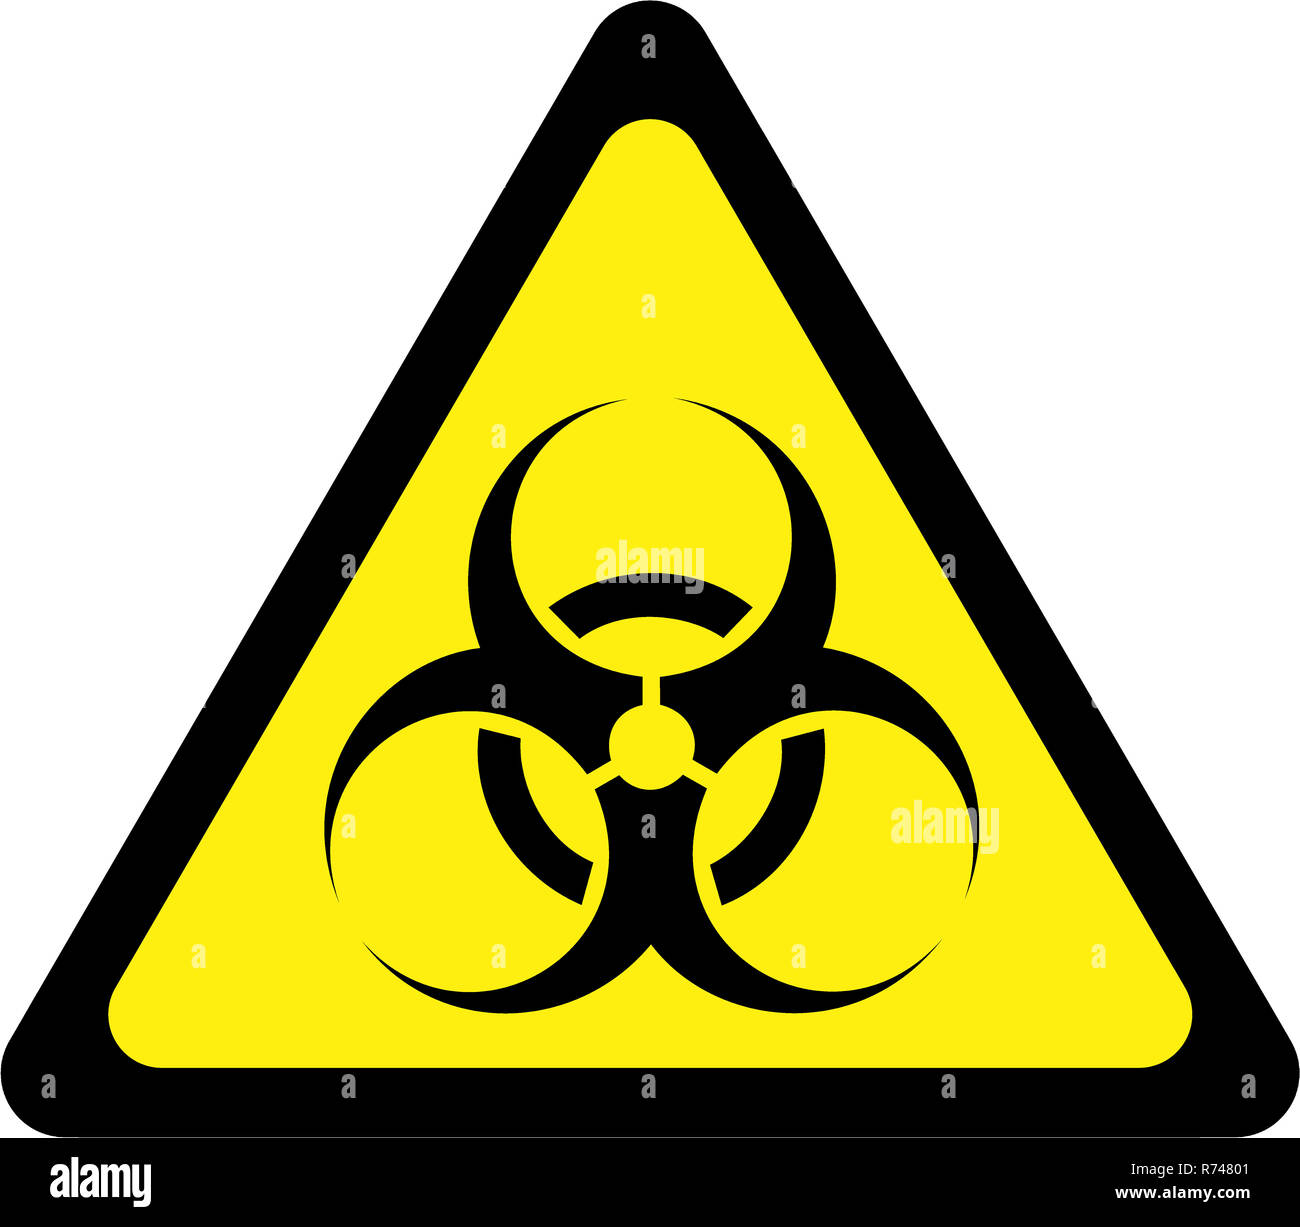 Yellow warning sign with biohazard substances symbol Stock Photo